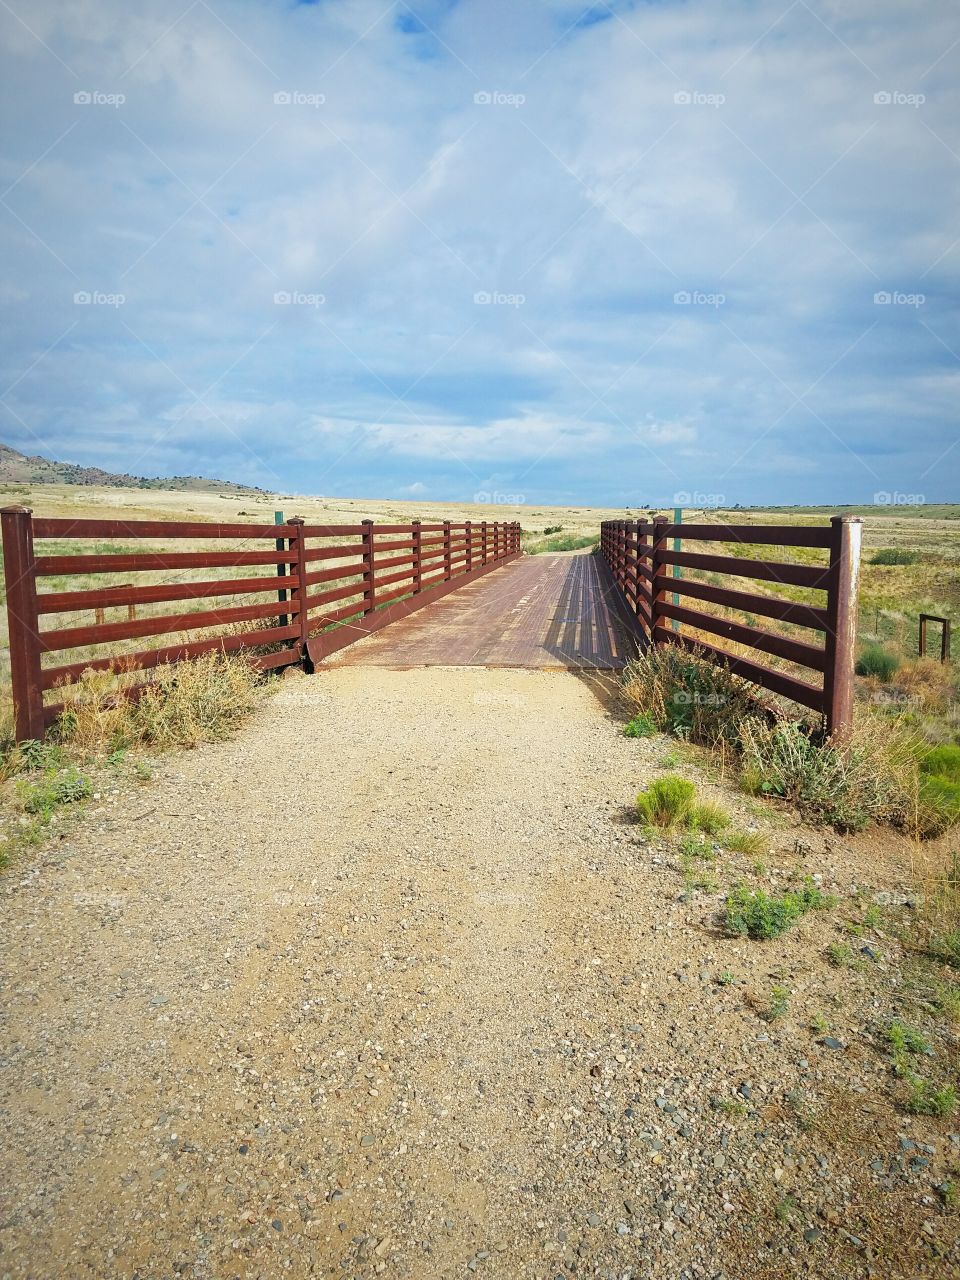 Rusted Bridge on prairie